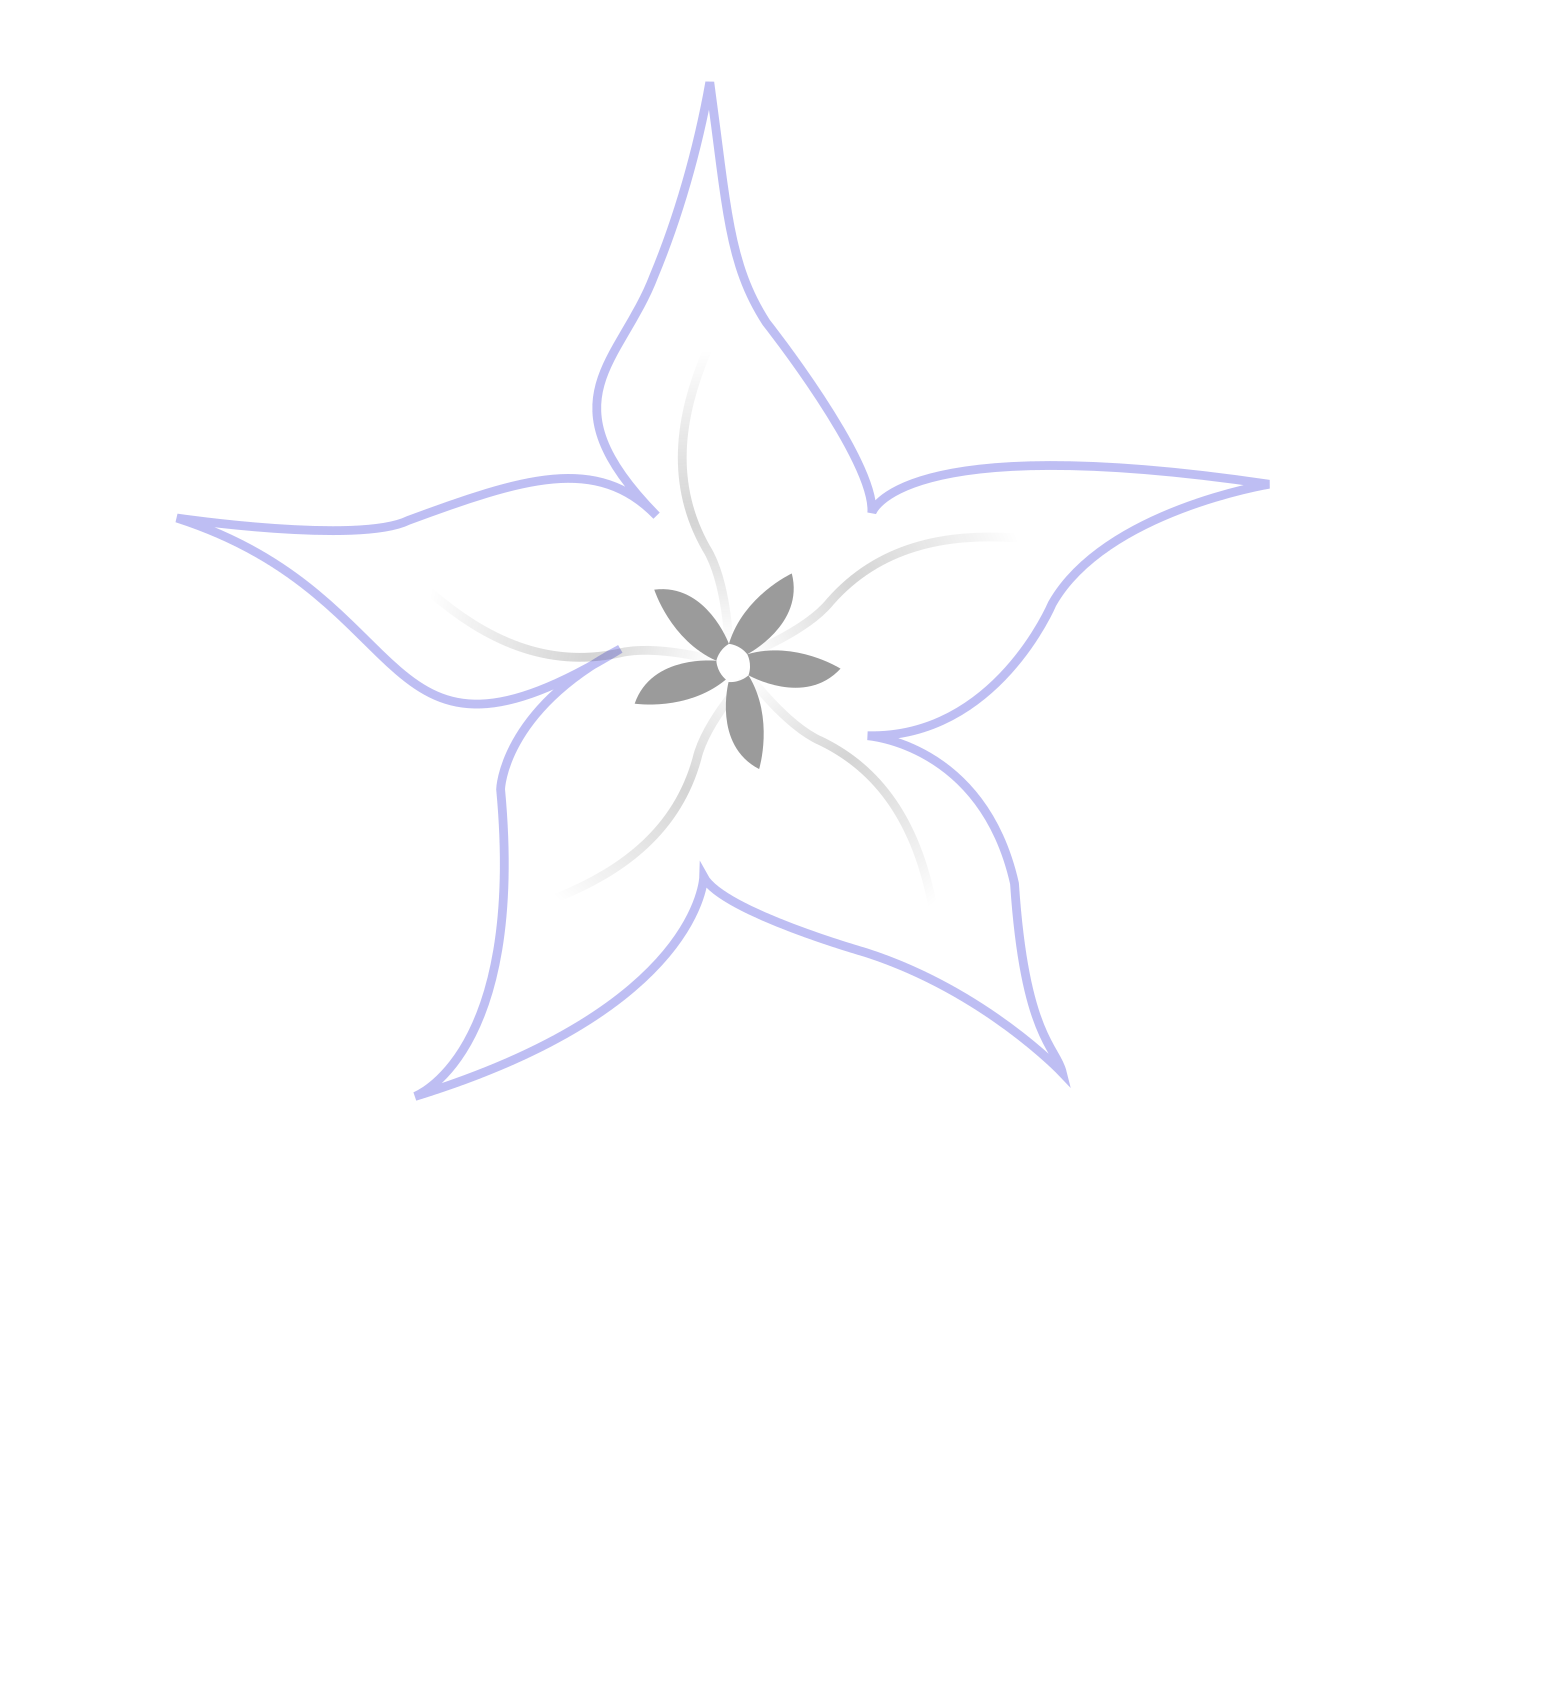 Windblume Network Monitoring